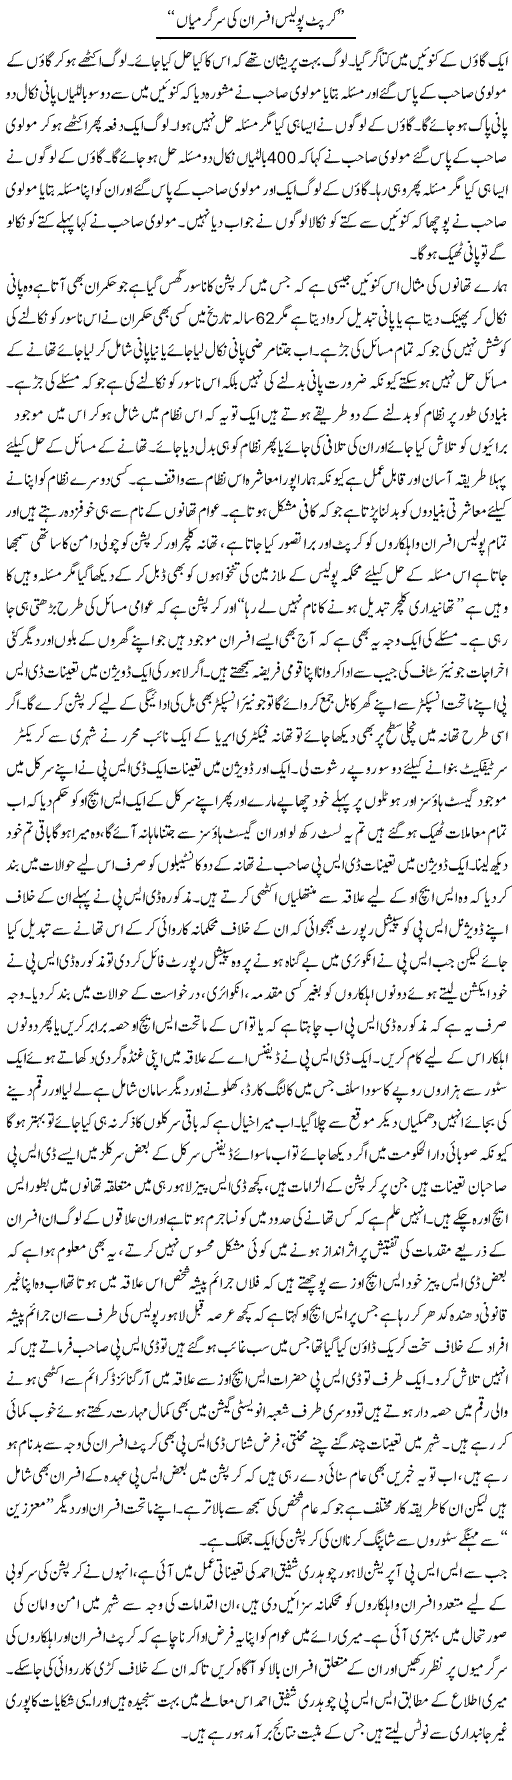 Corrupt Police Express Column Syed Mushraf 1 Feb 2010